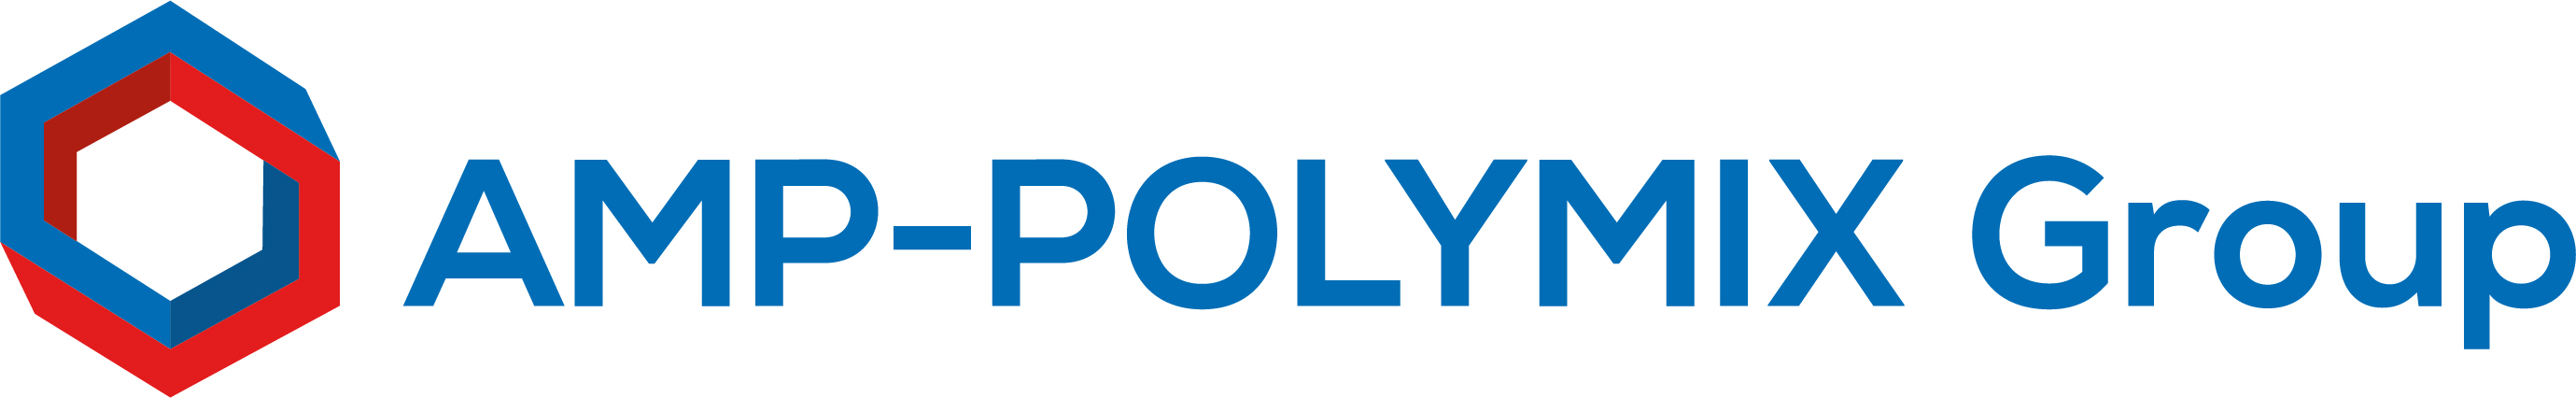 Polymix logo